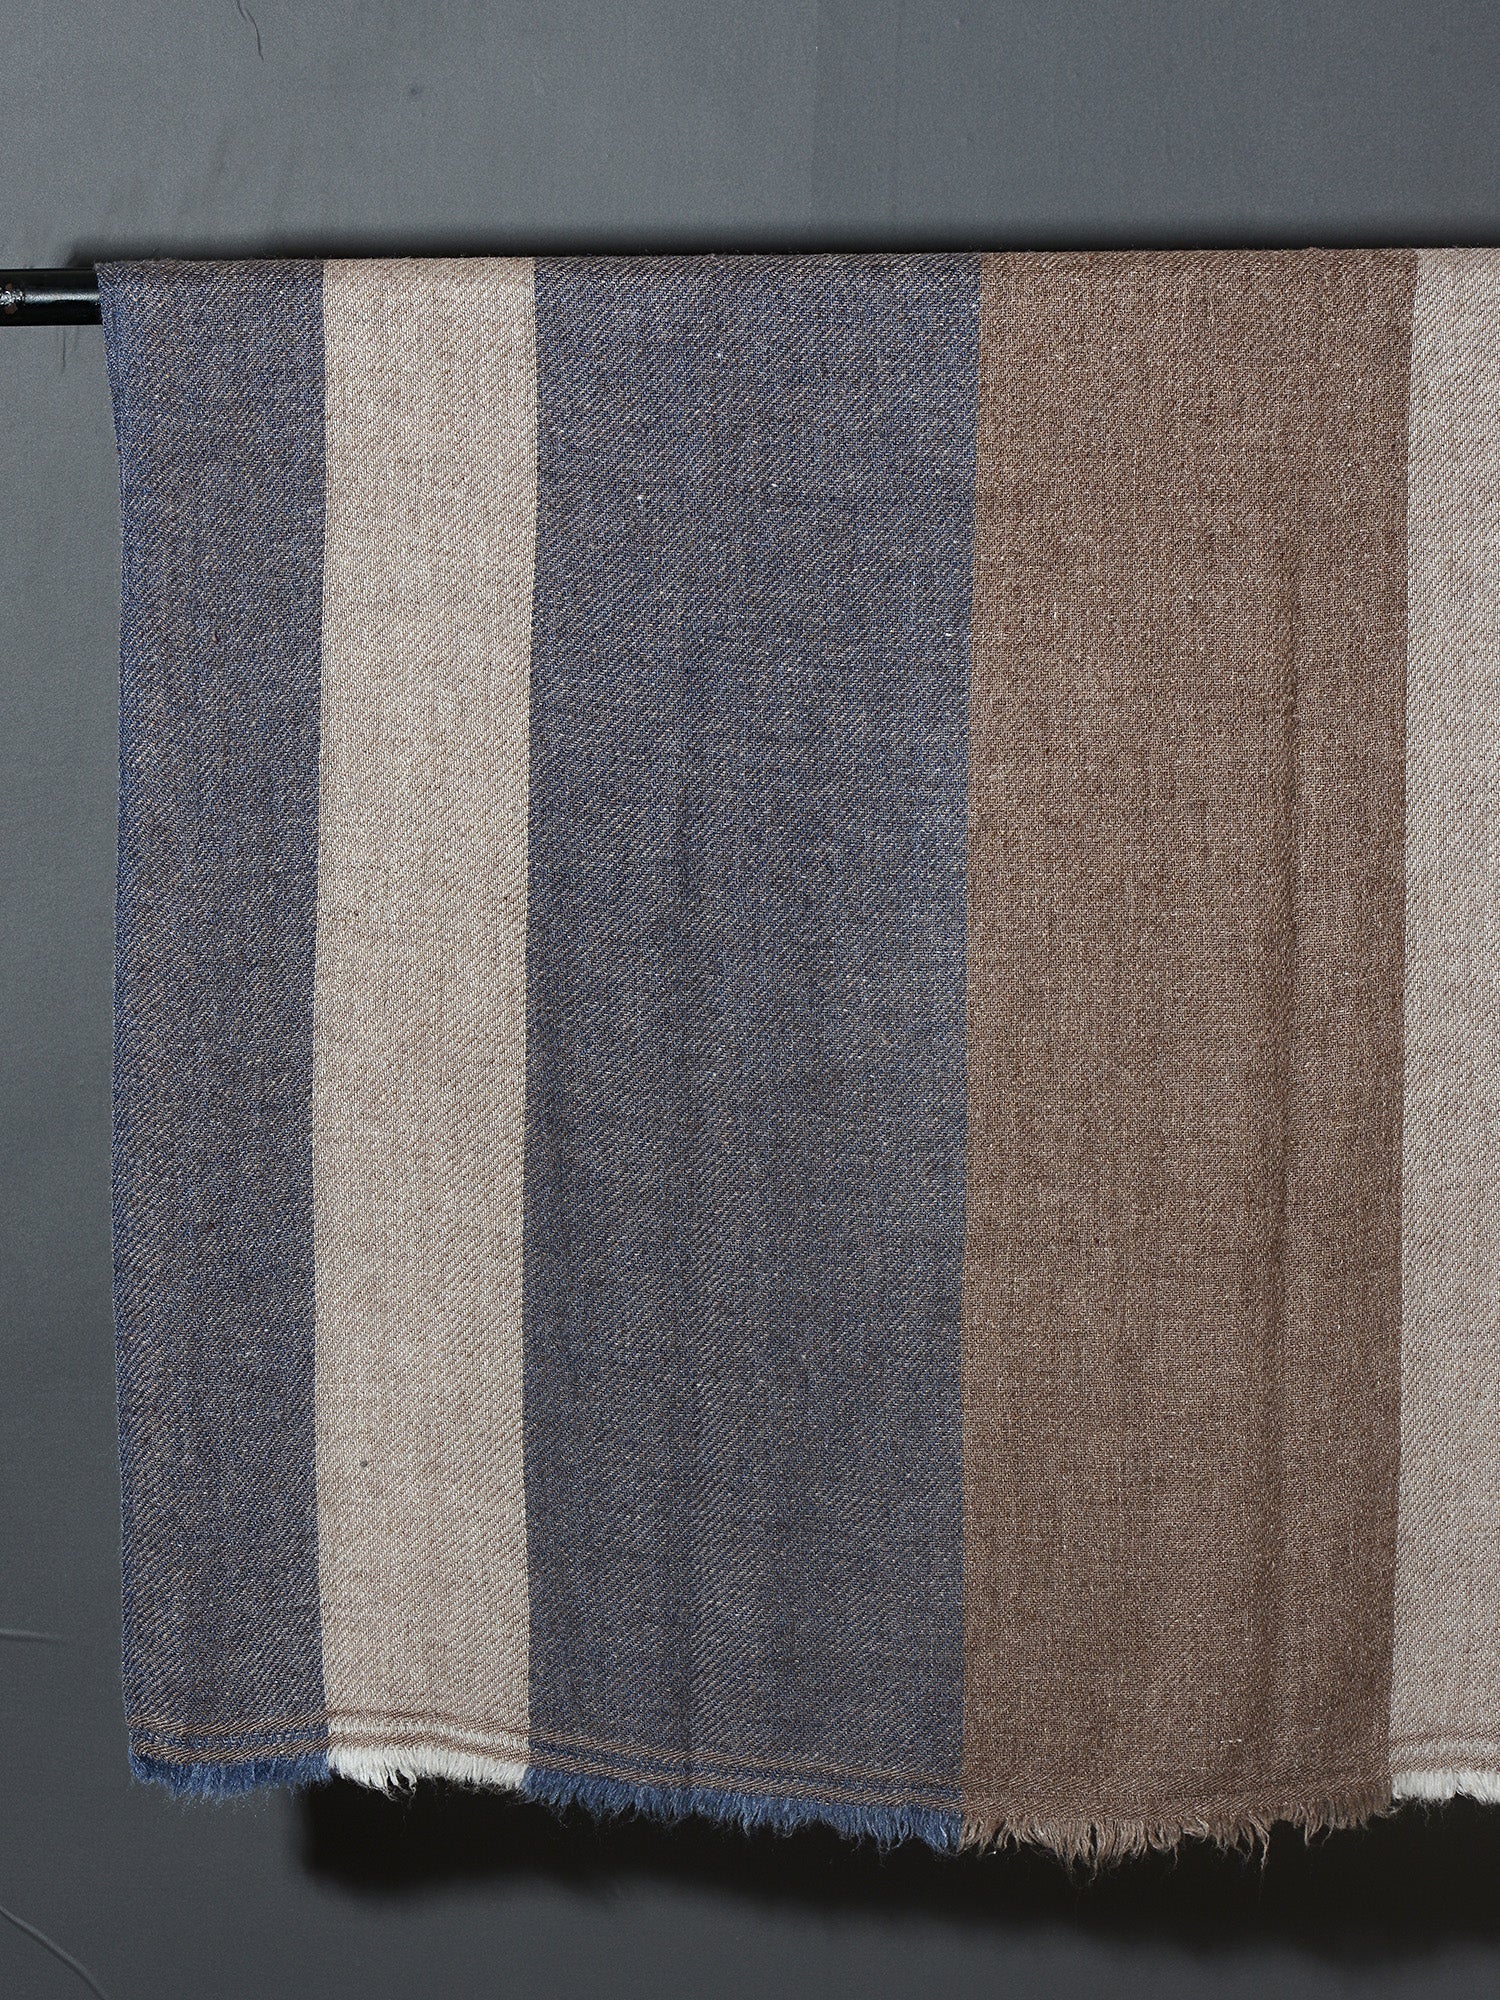 Striped Patterned Super Soft Woolen Muffler - Multi Dark Tones